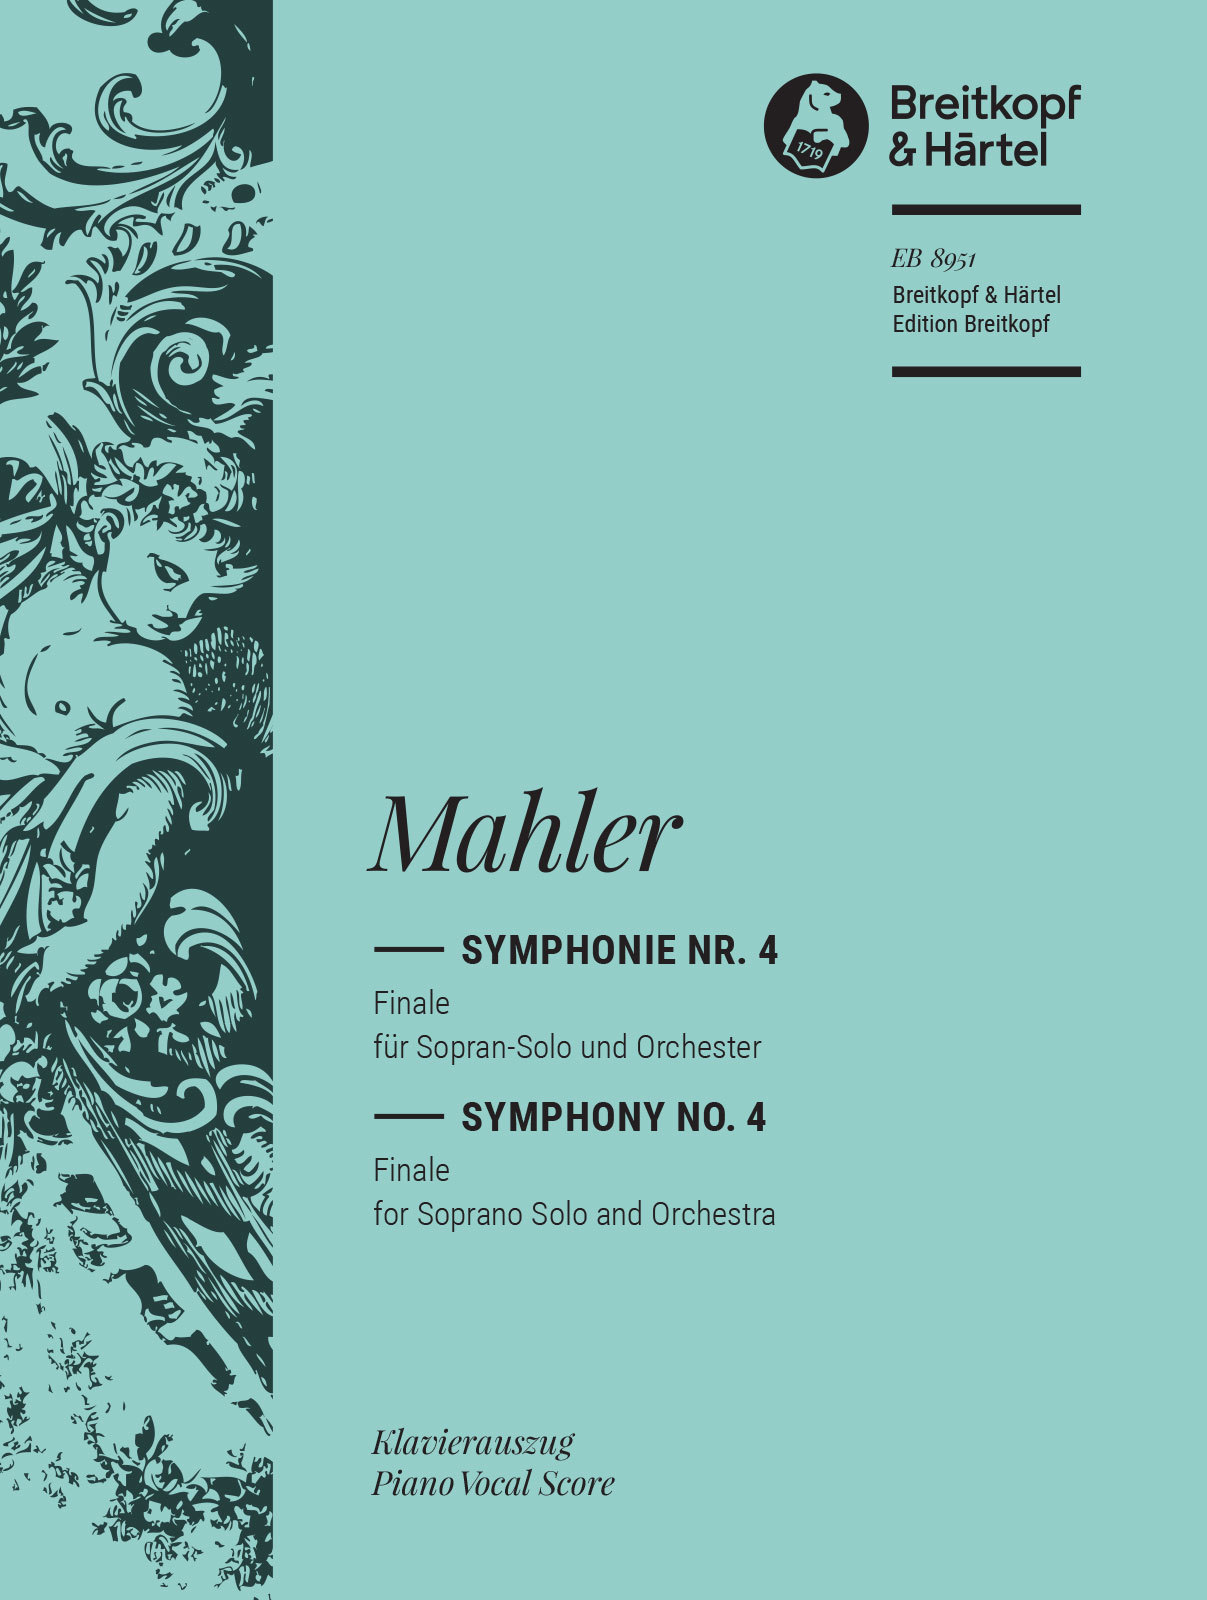 MAHLER - SYMPHONIE NR.4 FINALE FPR SOPRAN-SOLO UND ORCHESTER. KLAVIERAUSZUG